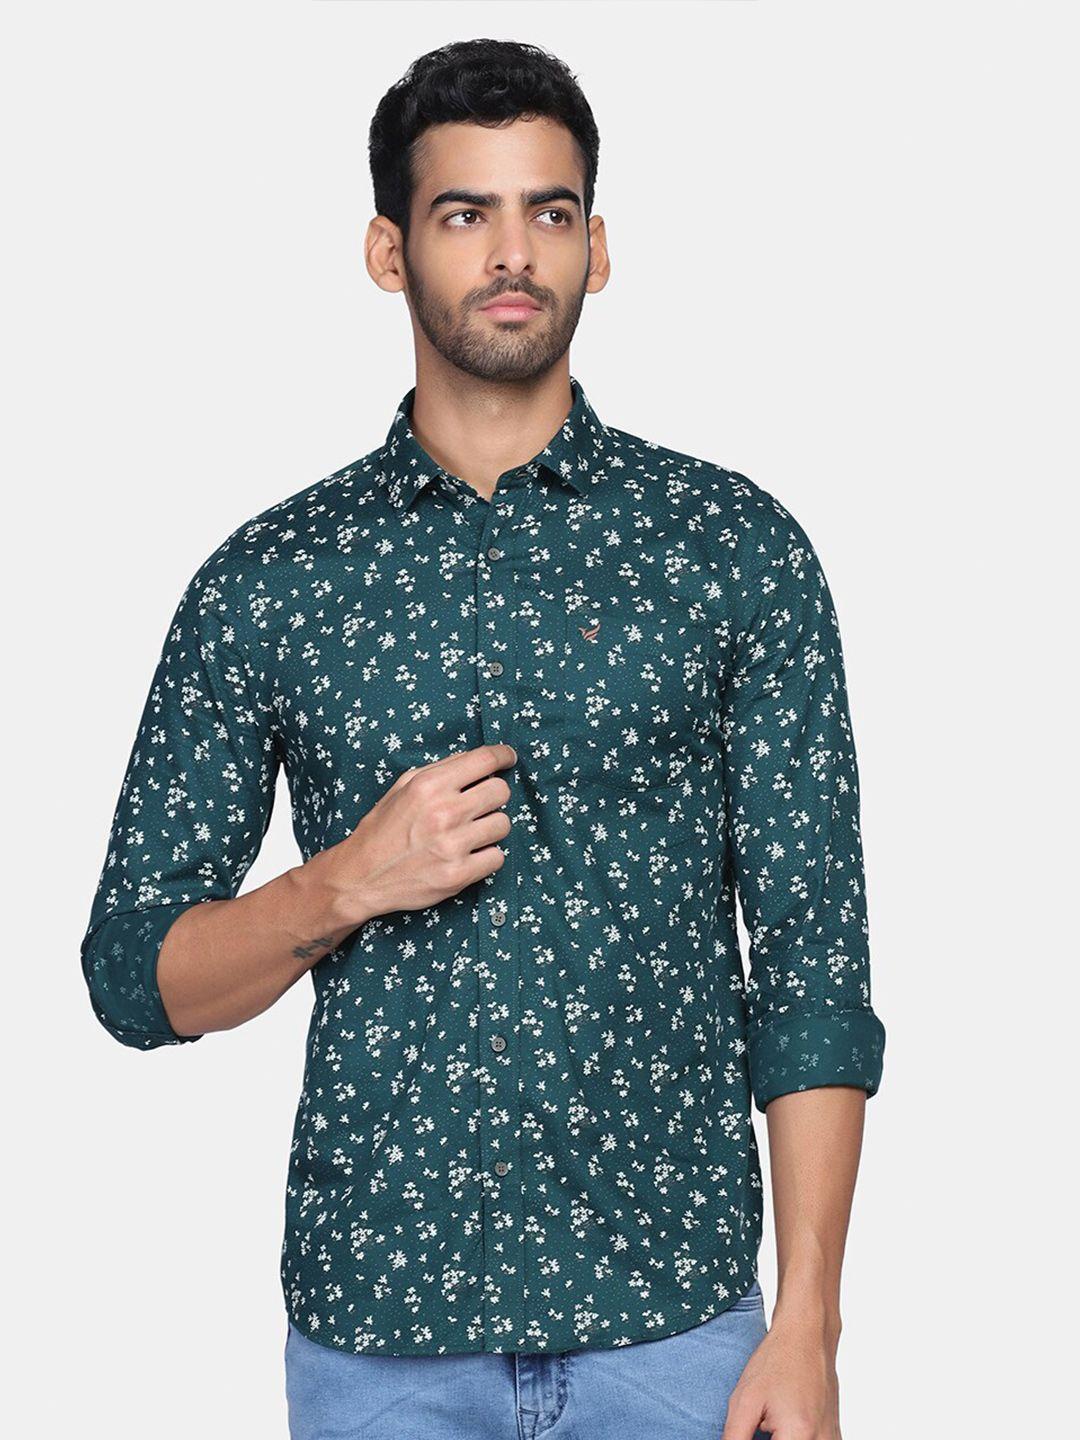 blackberrys-men-olive-green-slim-fit-floral-printed-casual-cotton-shirt